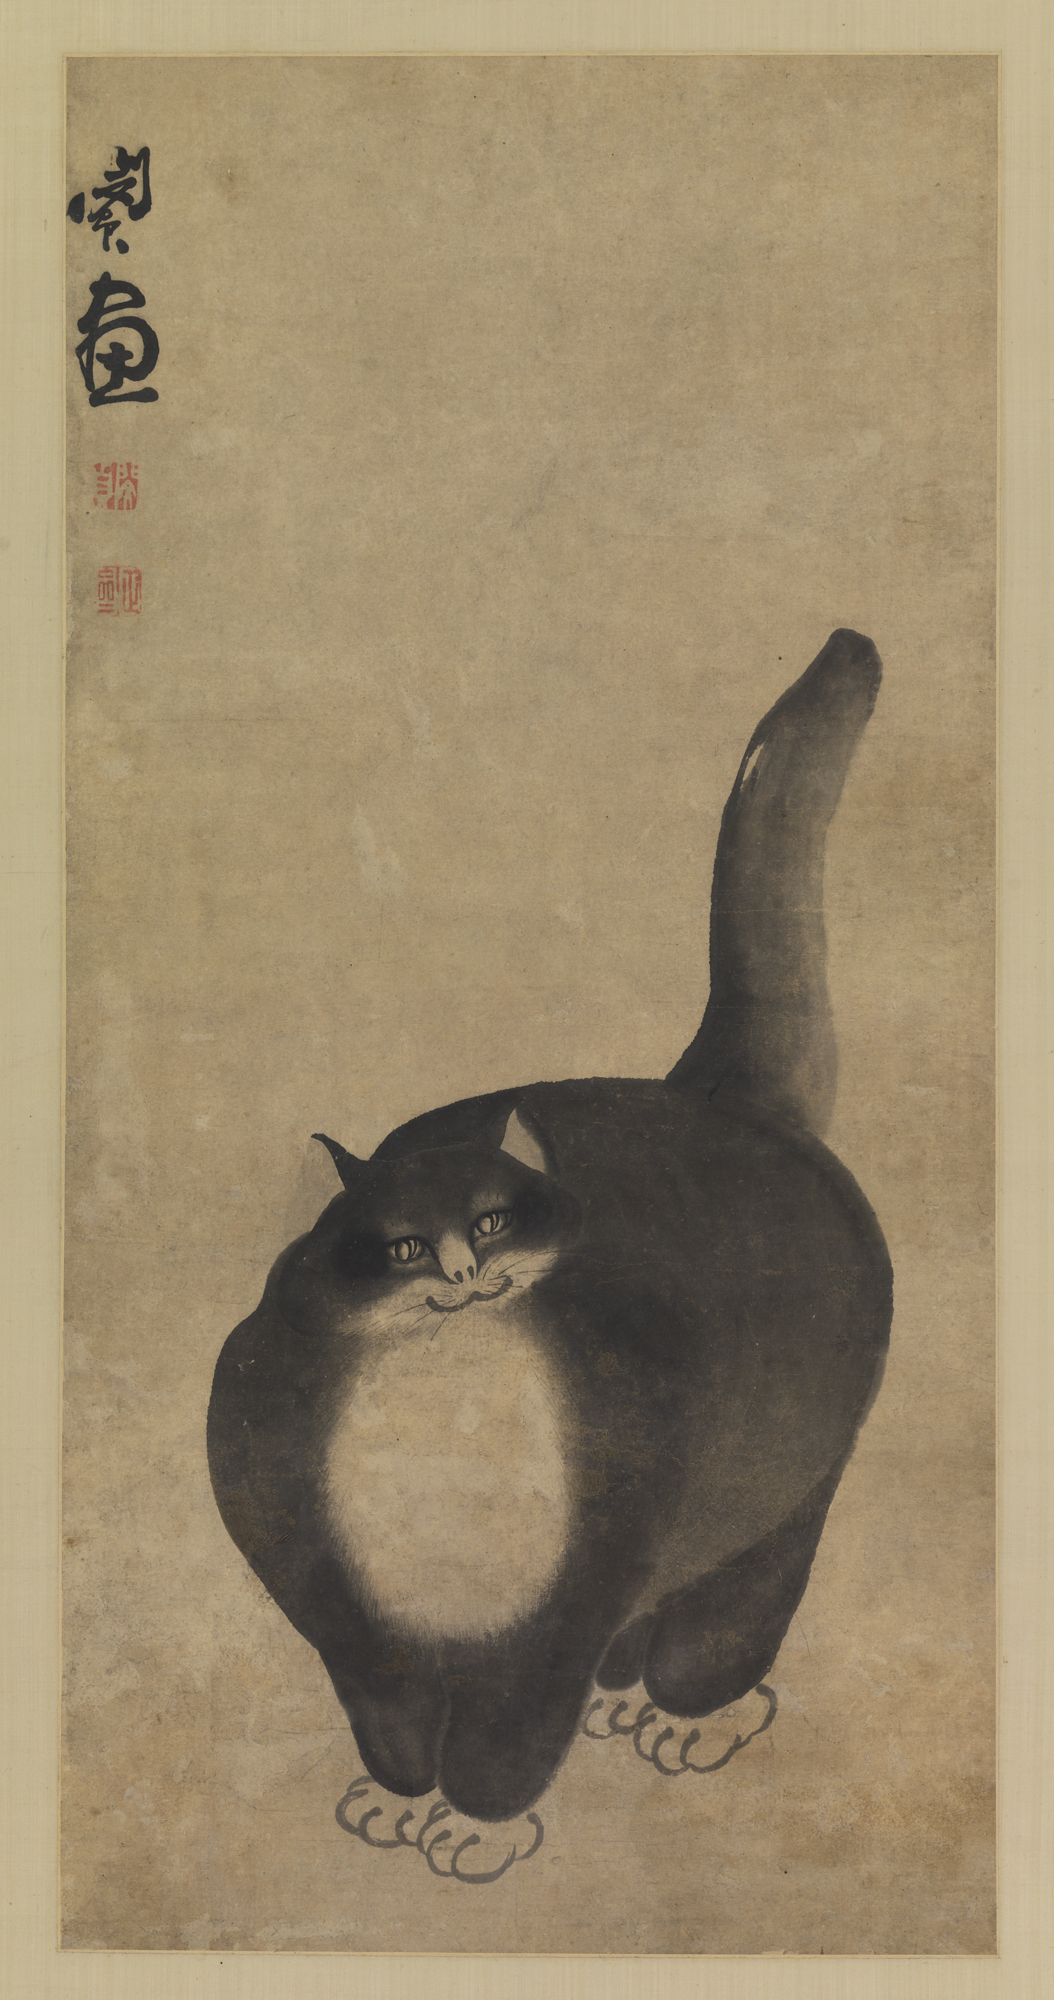 Black Cat by Min Zhen - 18th century - 78.5 x 38.5 cm Princeton University Art Museum